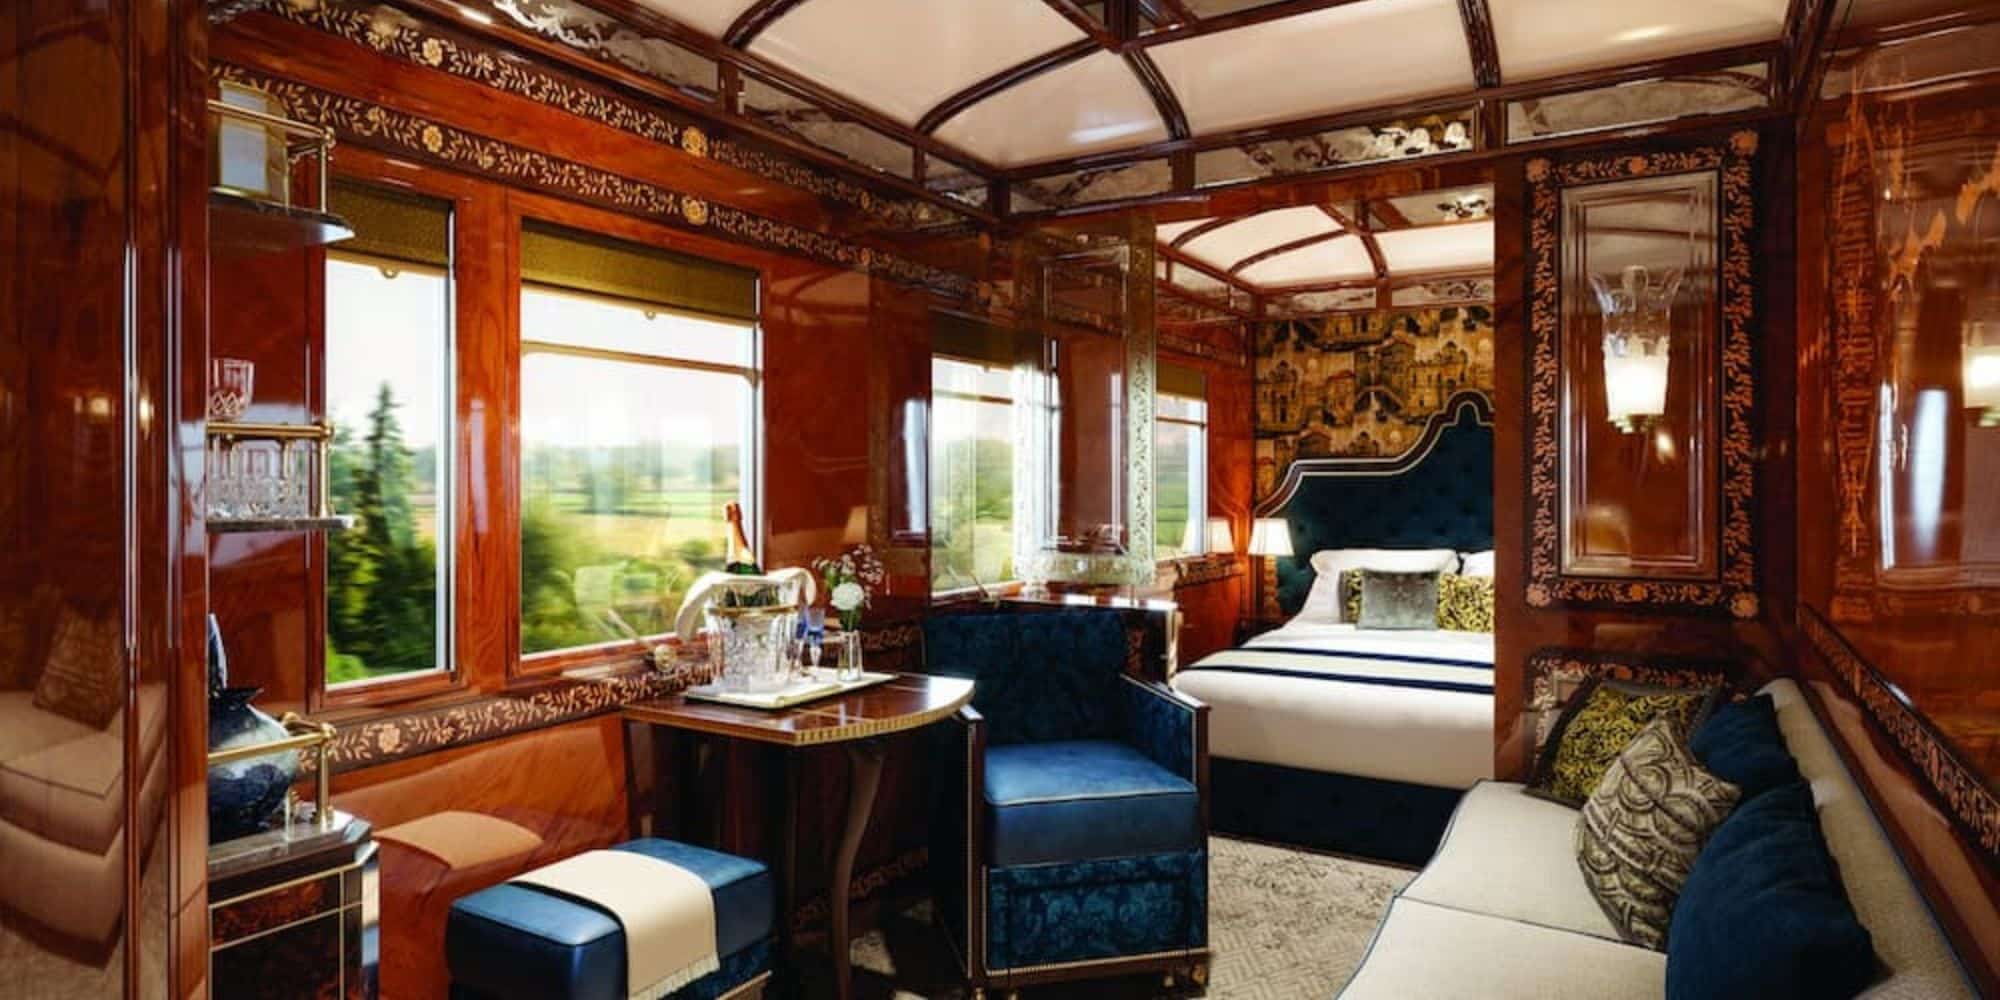 Orient Express 15 8 22 1 - Orient Express: Ένα μαγικό υπερπολυτελές ταξίδι στο χρόνο - Πόσο κοστίζει το ιστορικό δρομολόγιο Παρίσι-Κωνσταντινούπολη; (εικόνες & βίντεο)